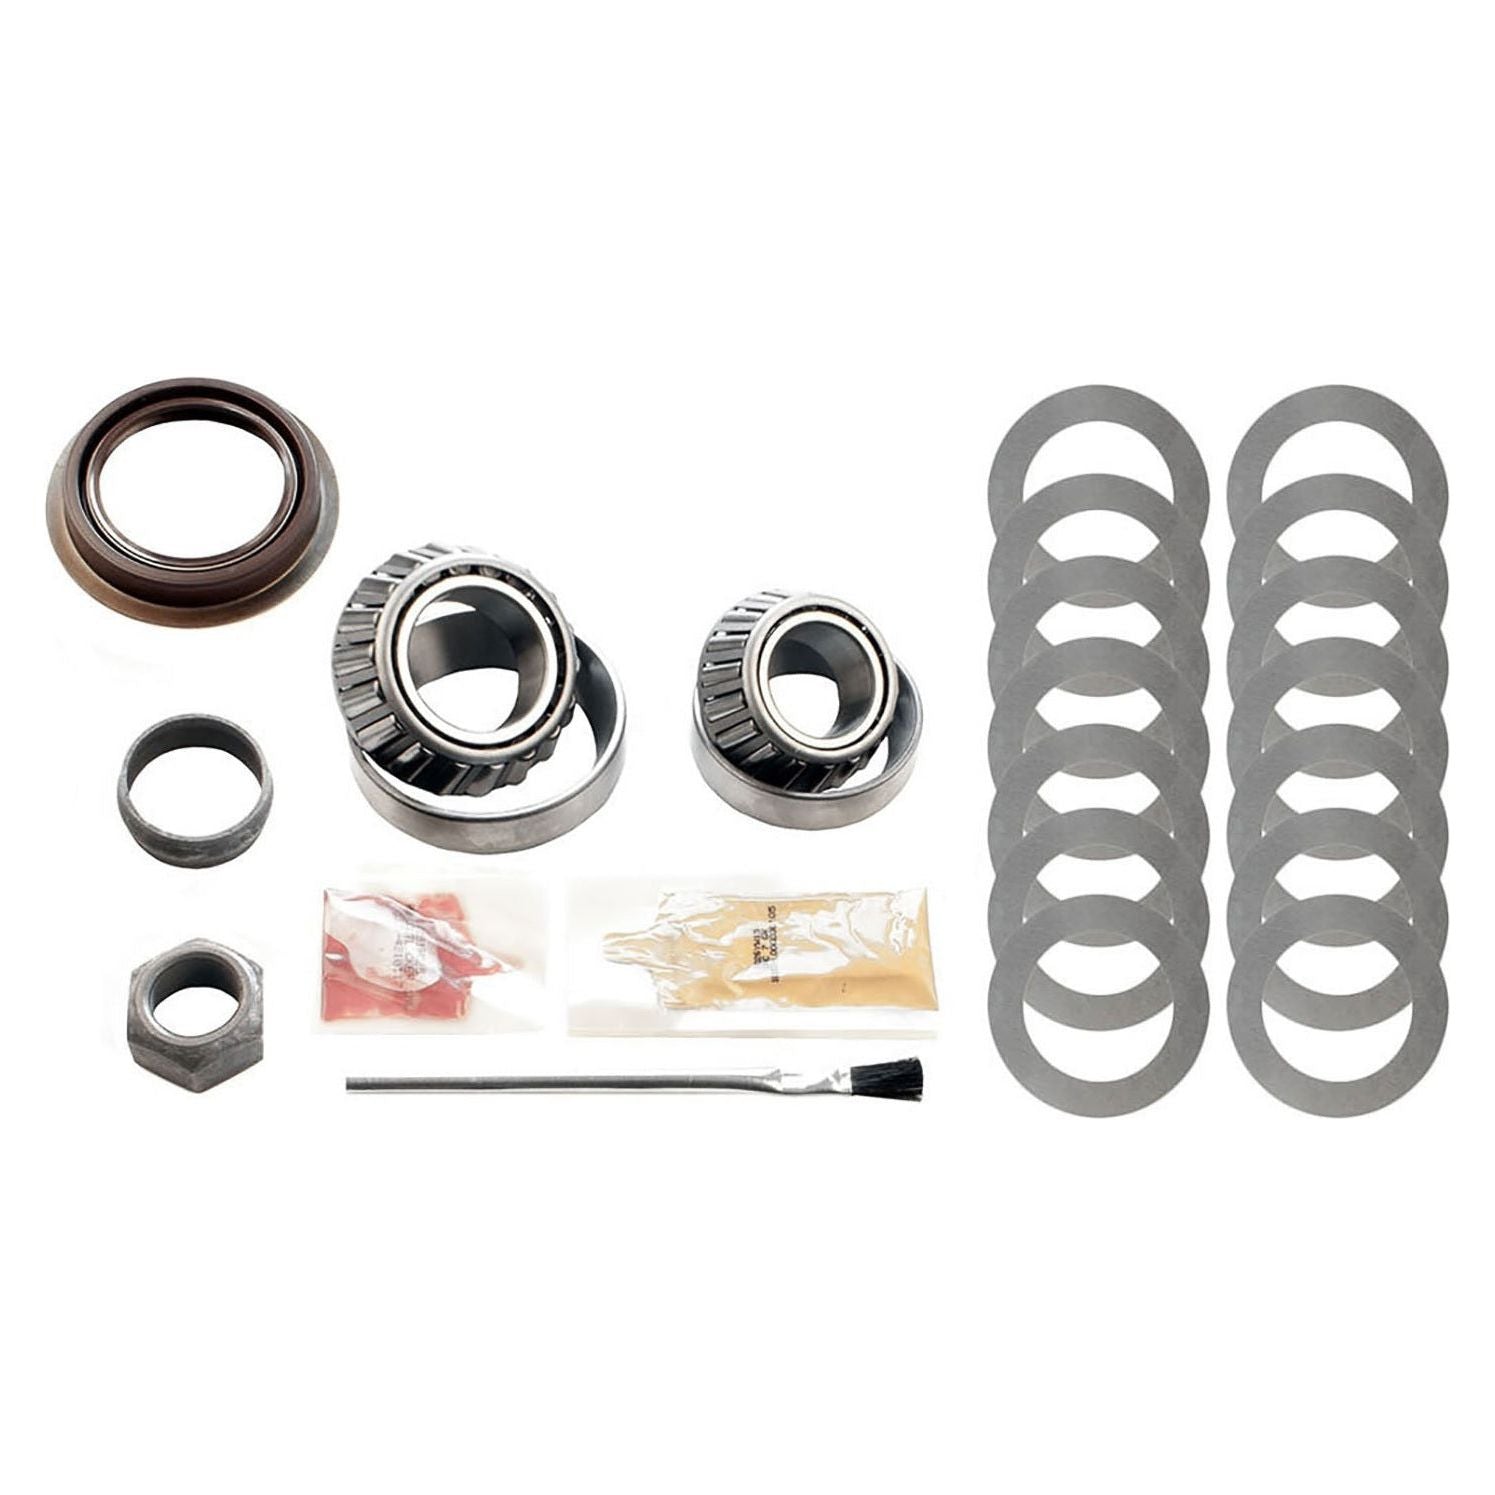 Motive Gear Basic Ring and Pinion Gear Installation Kits R10RLPK